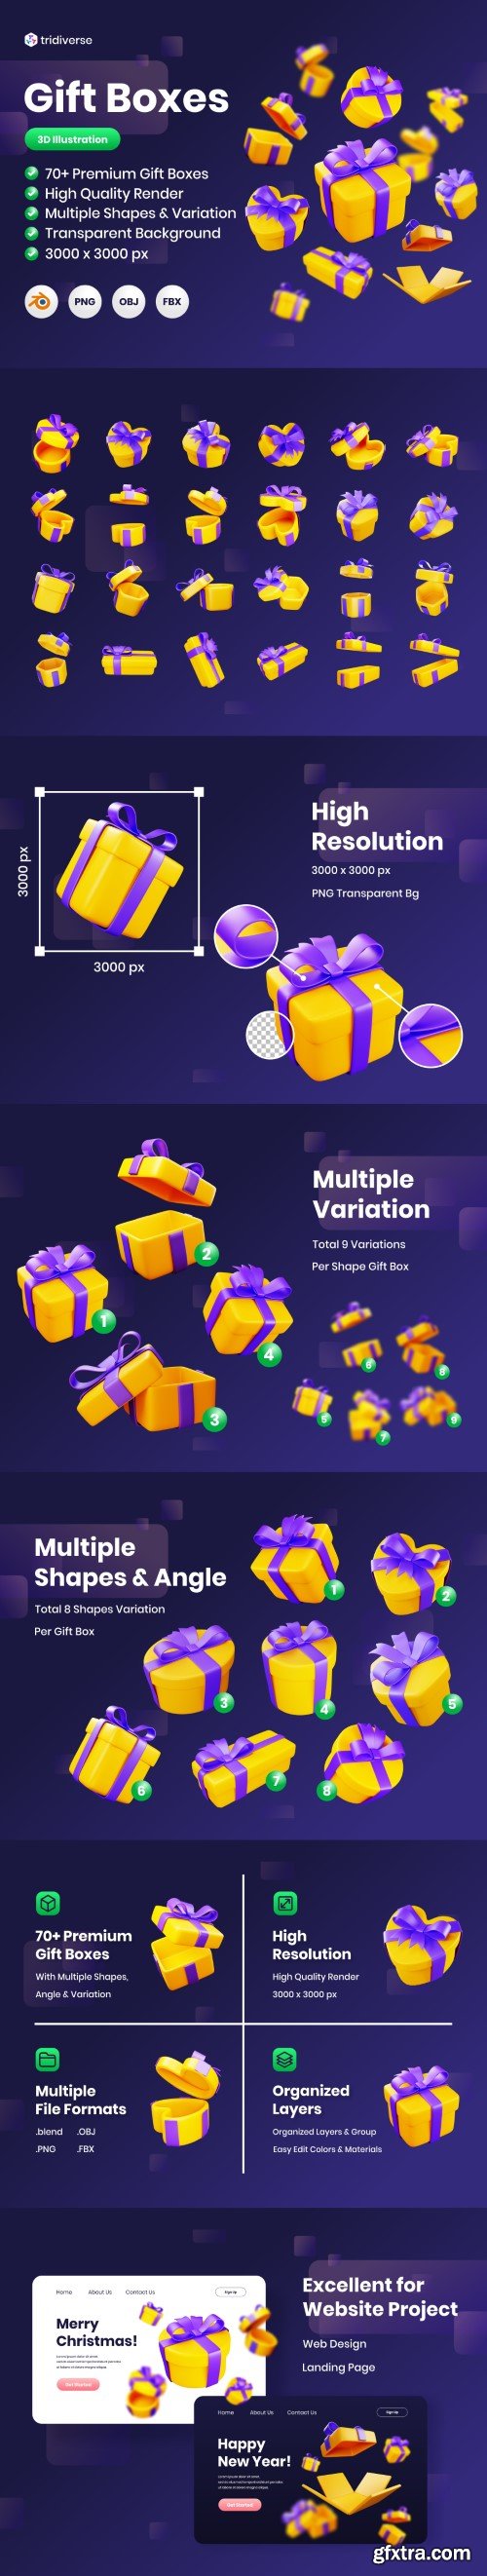 UI8 - Gift Boxes - 3D Illustration